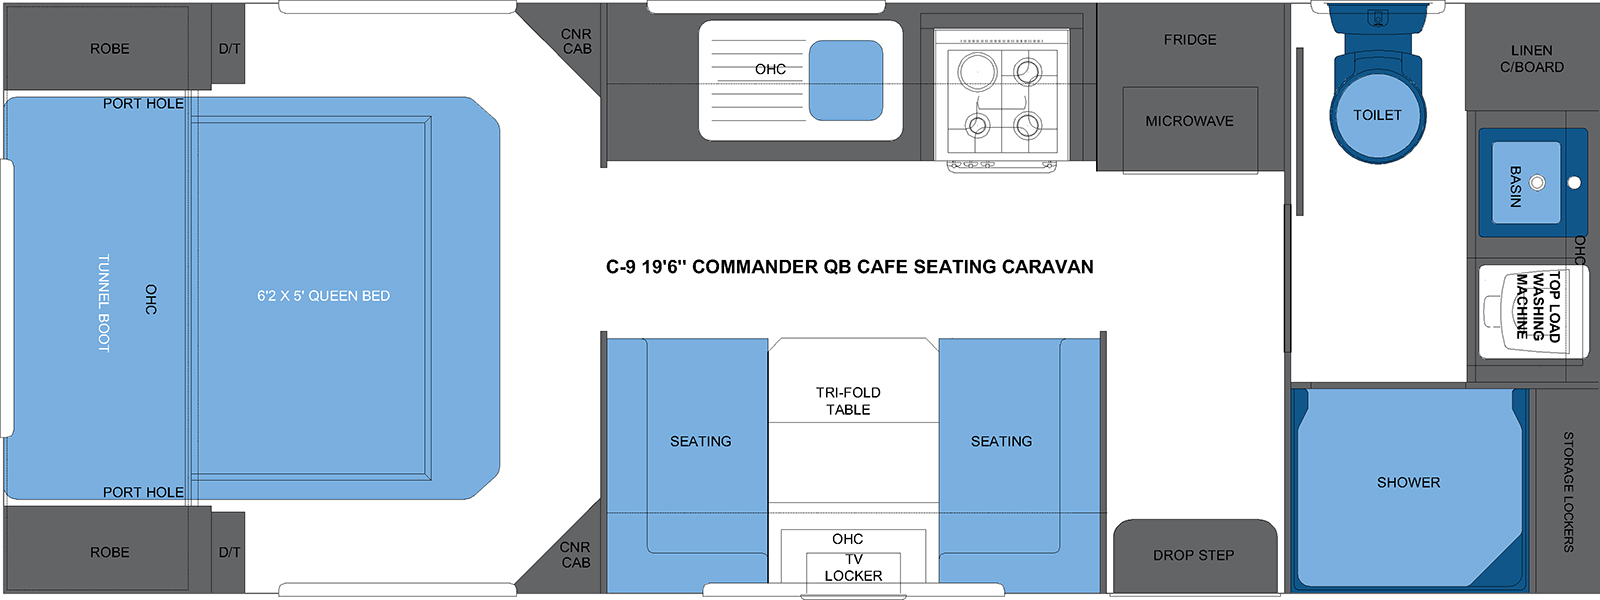 C-9 19'6 COMMANDER QB CAFE SEATING CARAVAN